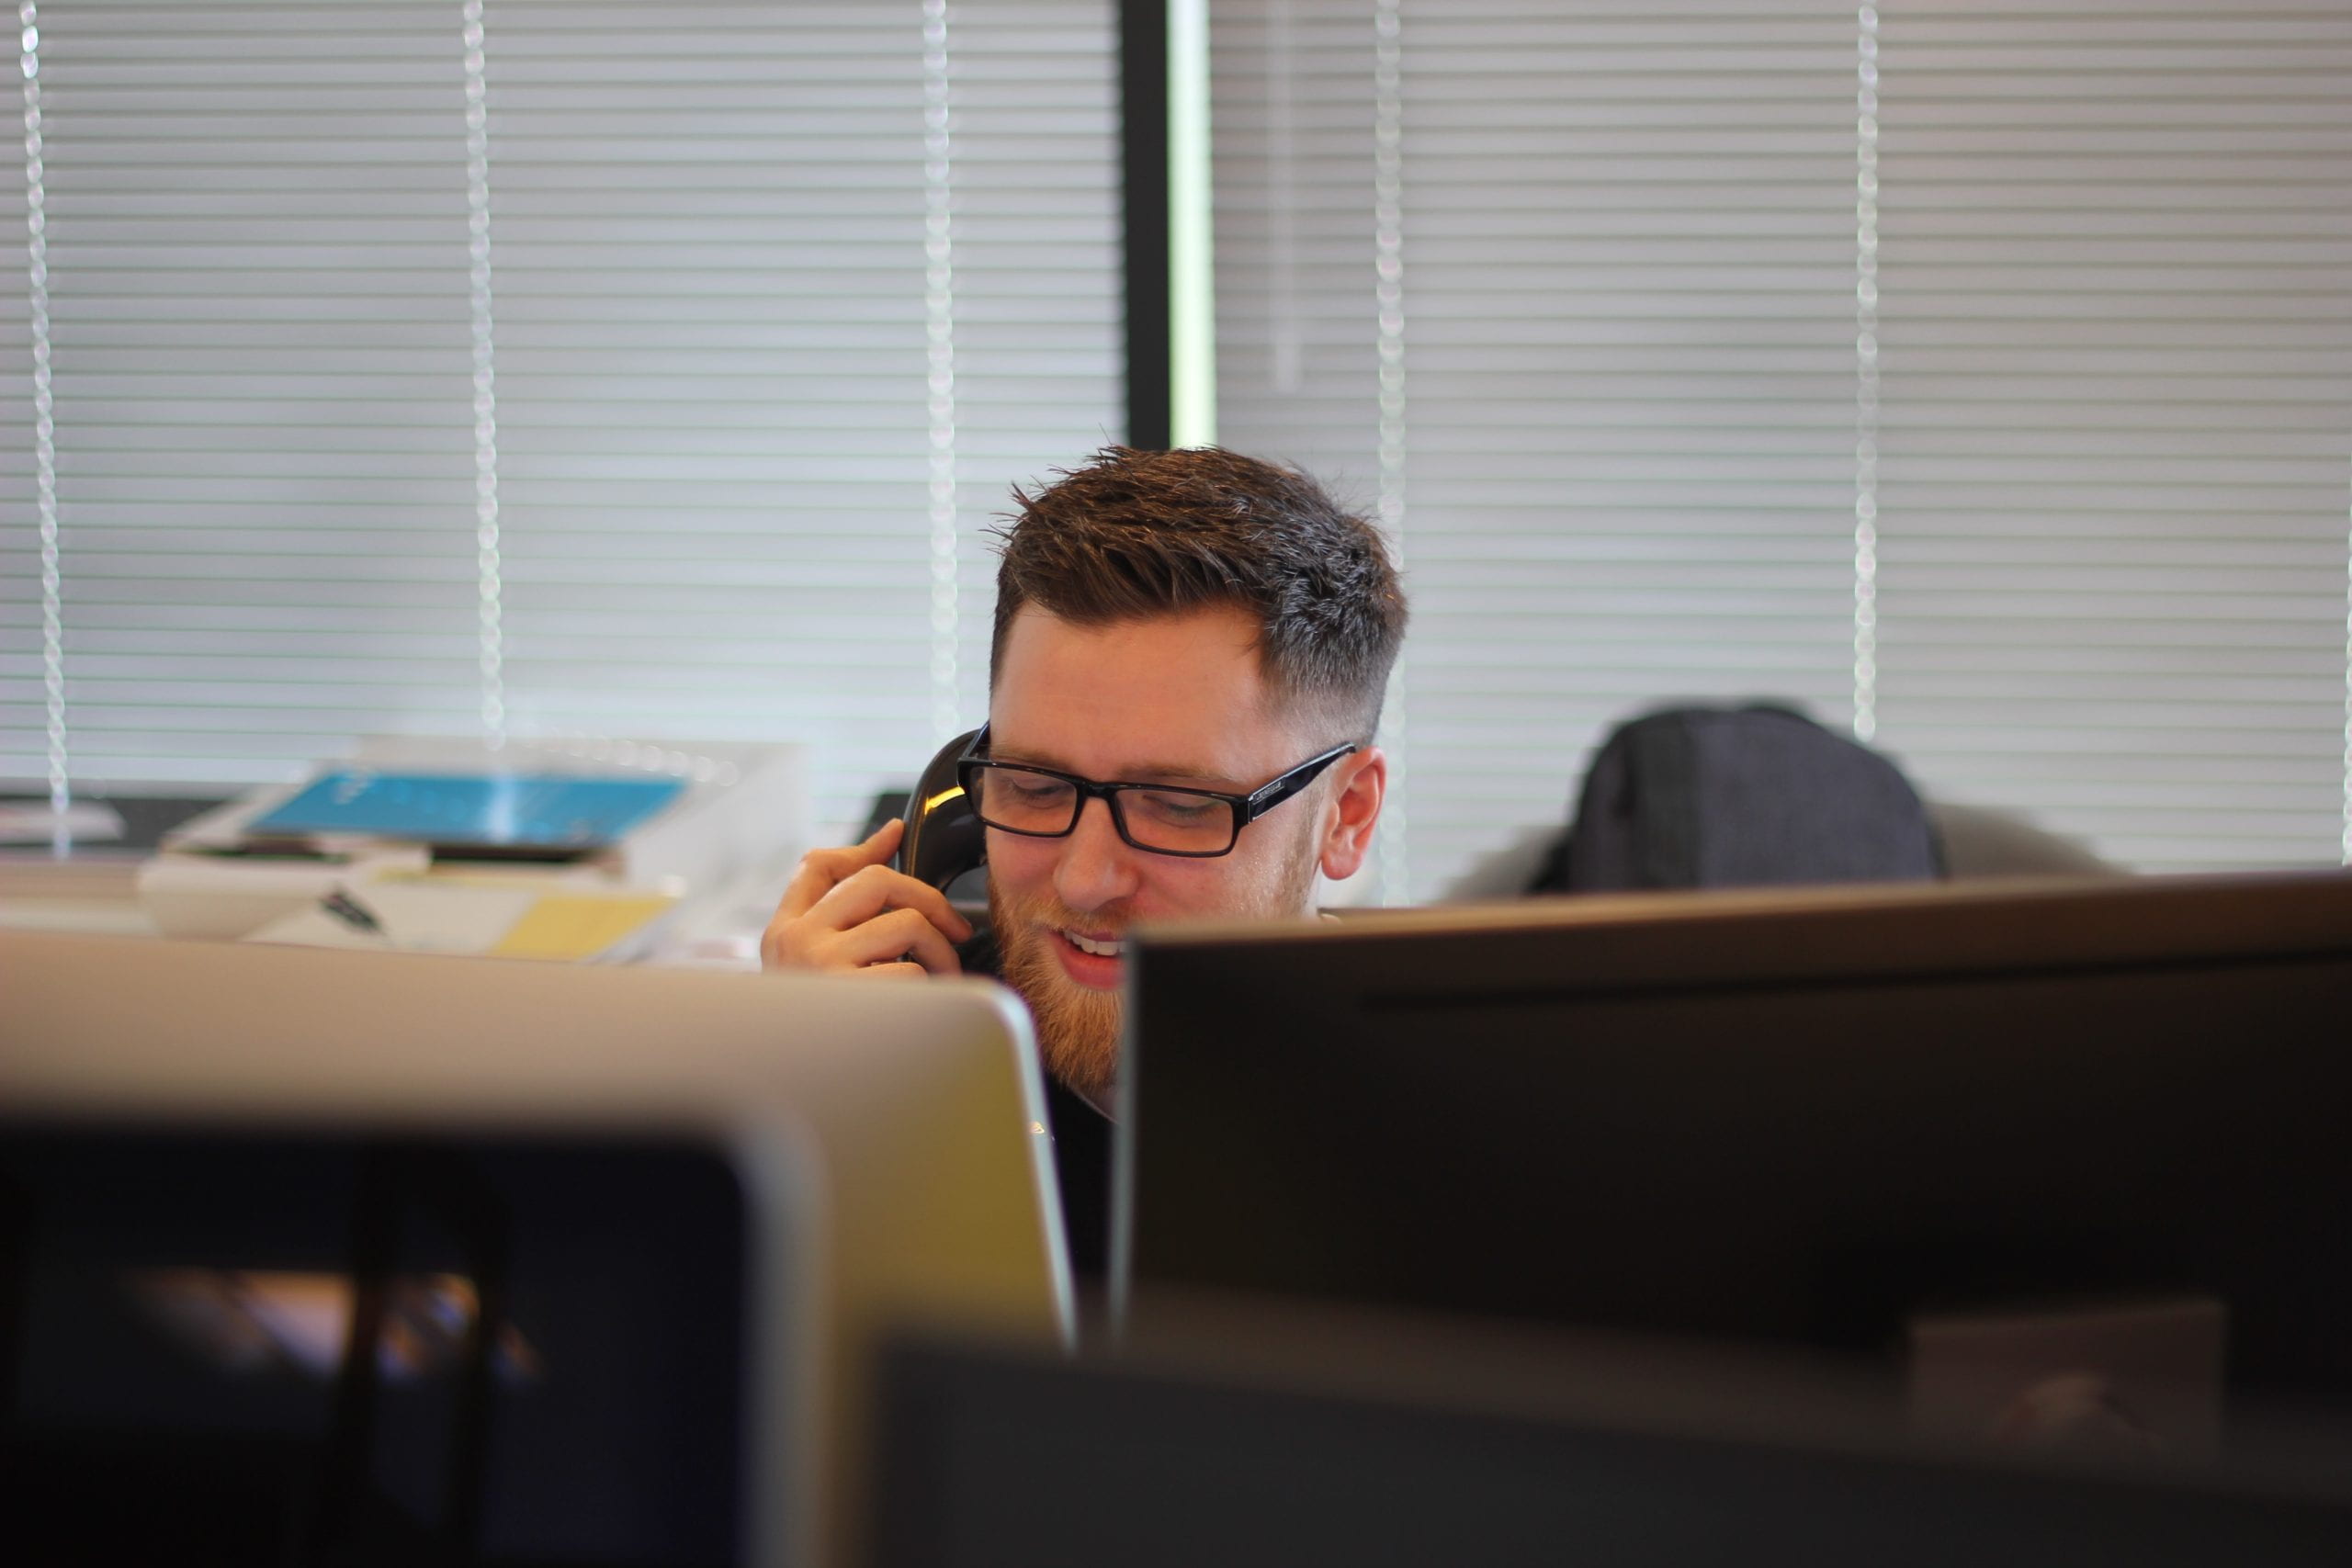 Smiling man wearing glasses sitting behind desk answering telephone. 